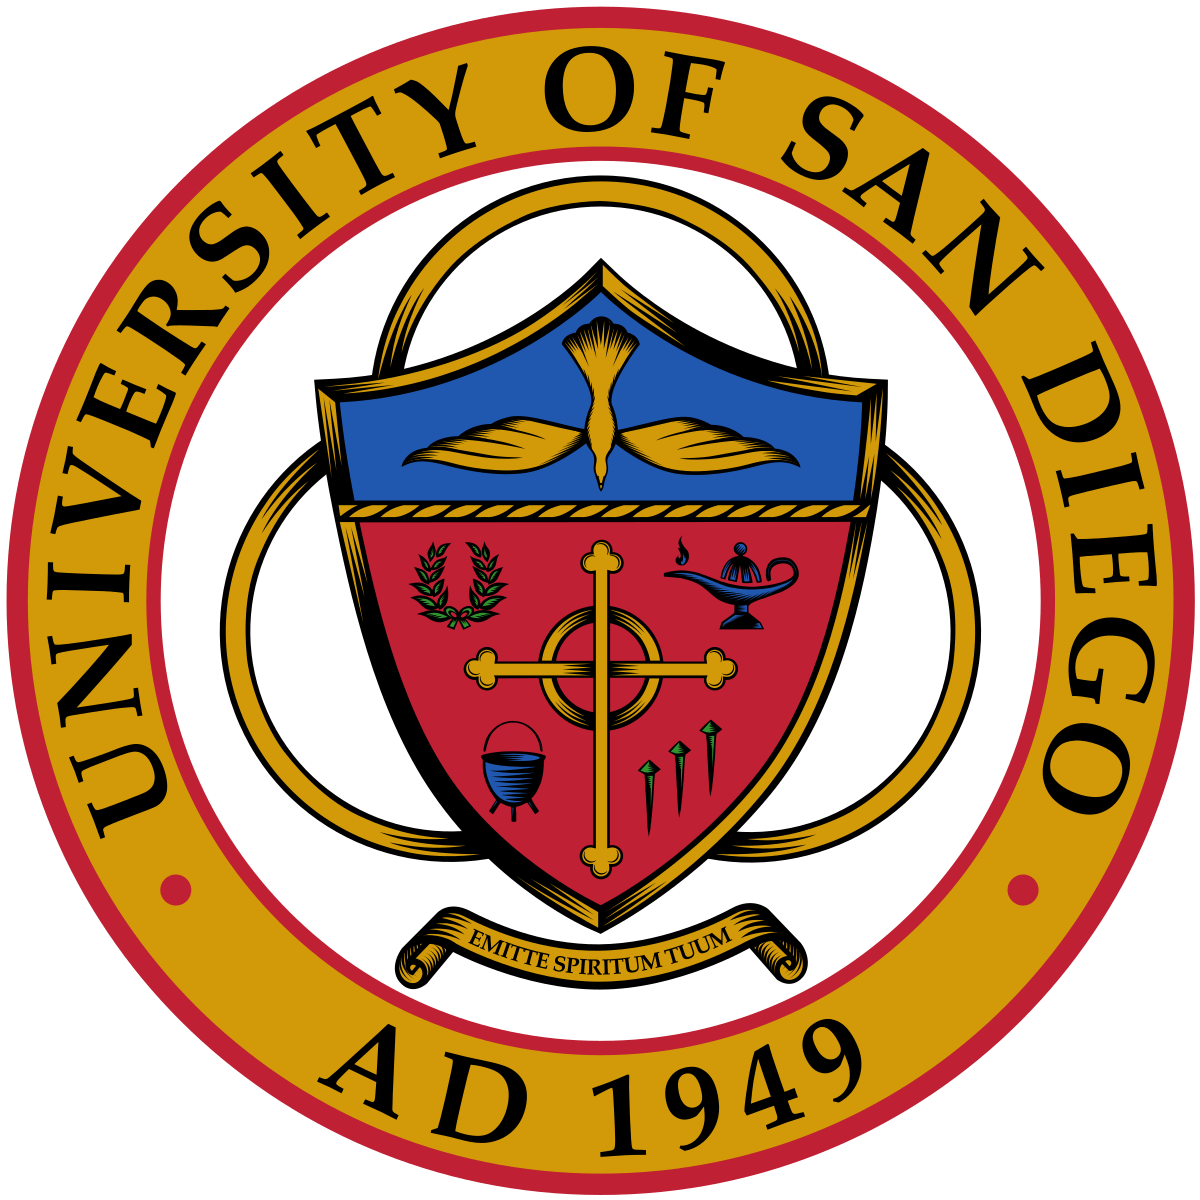 University of San Diego Logo - University of San Diego